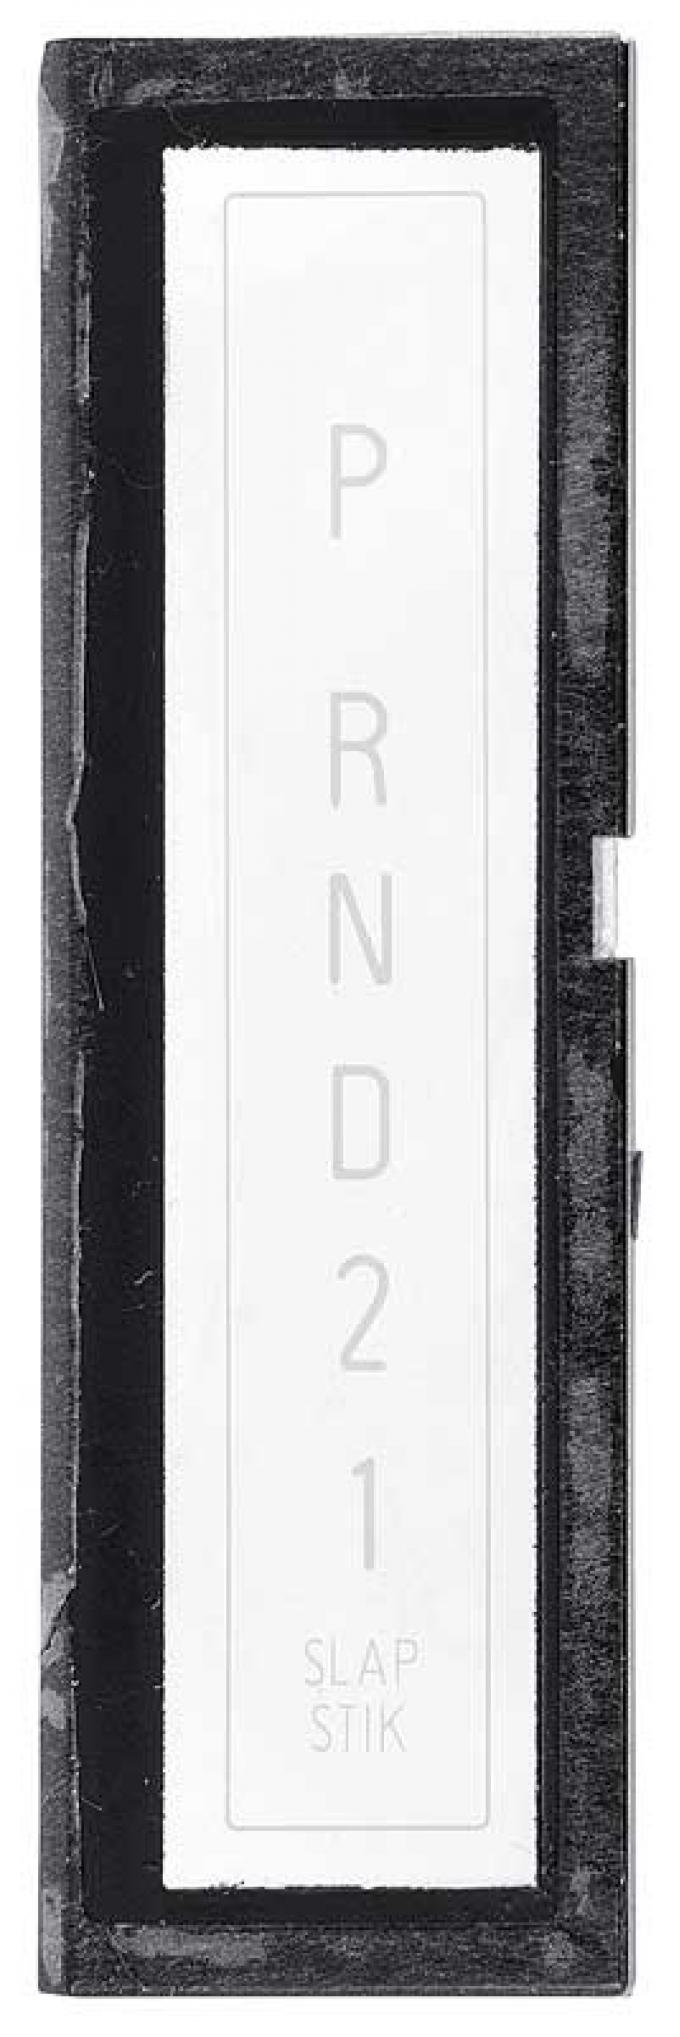 OER 1971-74 Mopar B / E-Body Console Shift Indicator Lens (P-R-N-D-2-1 Slap Stik) MD4024